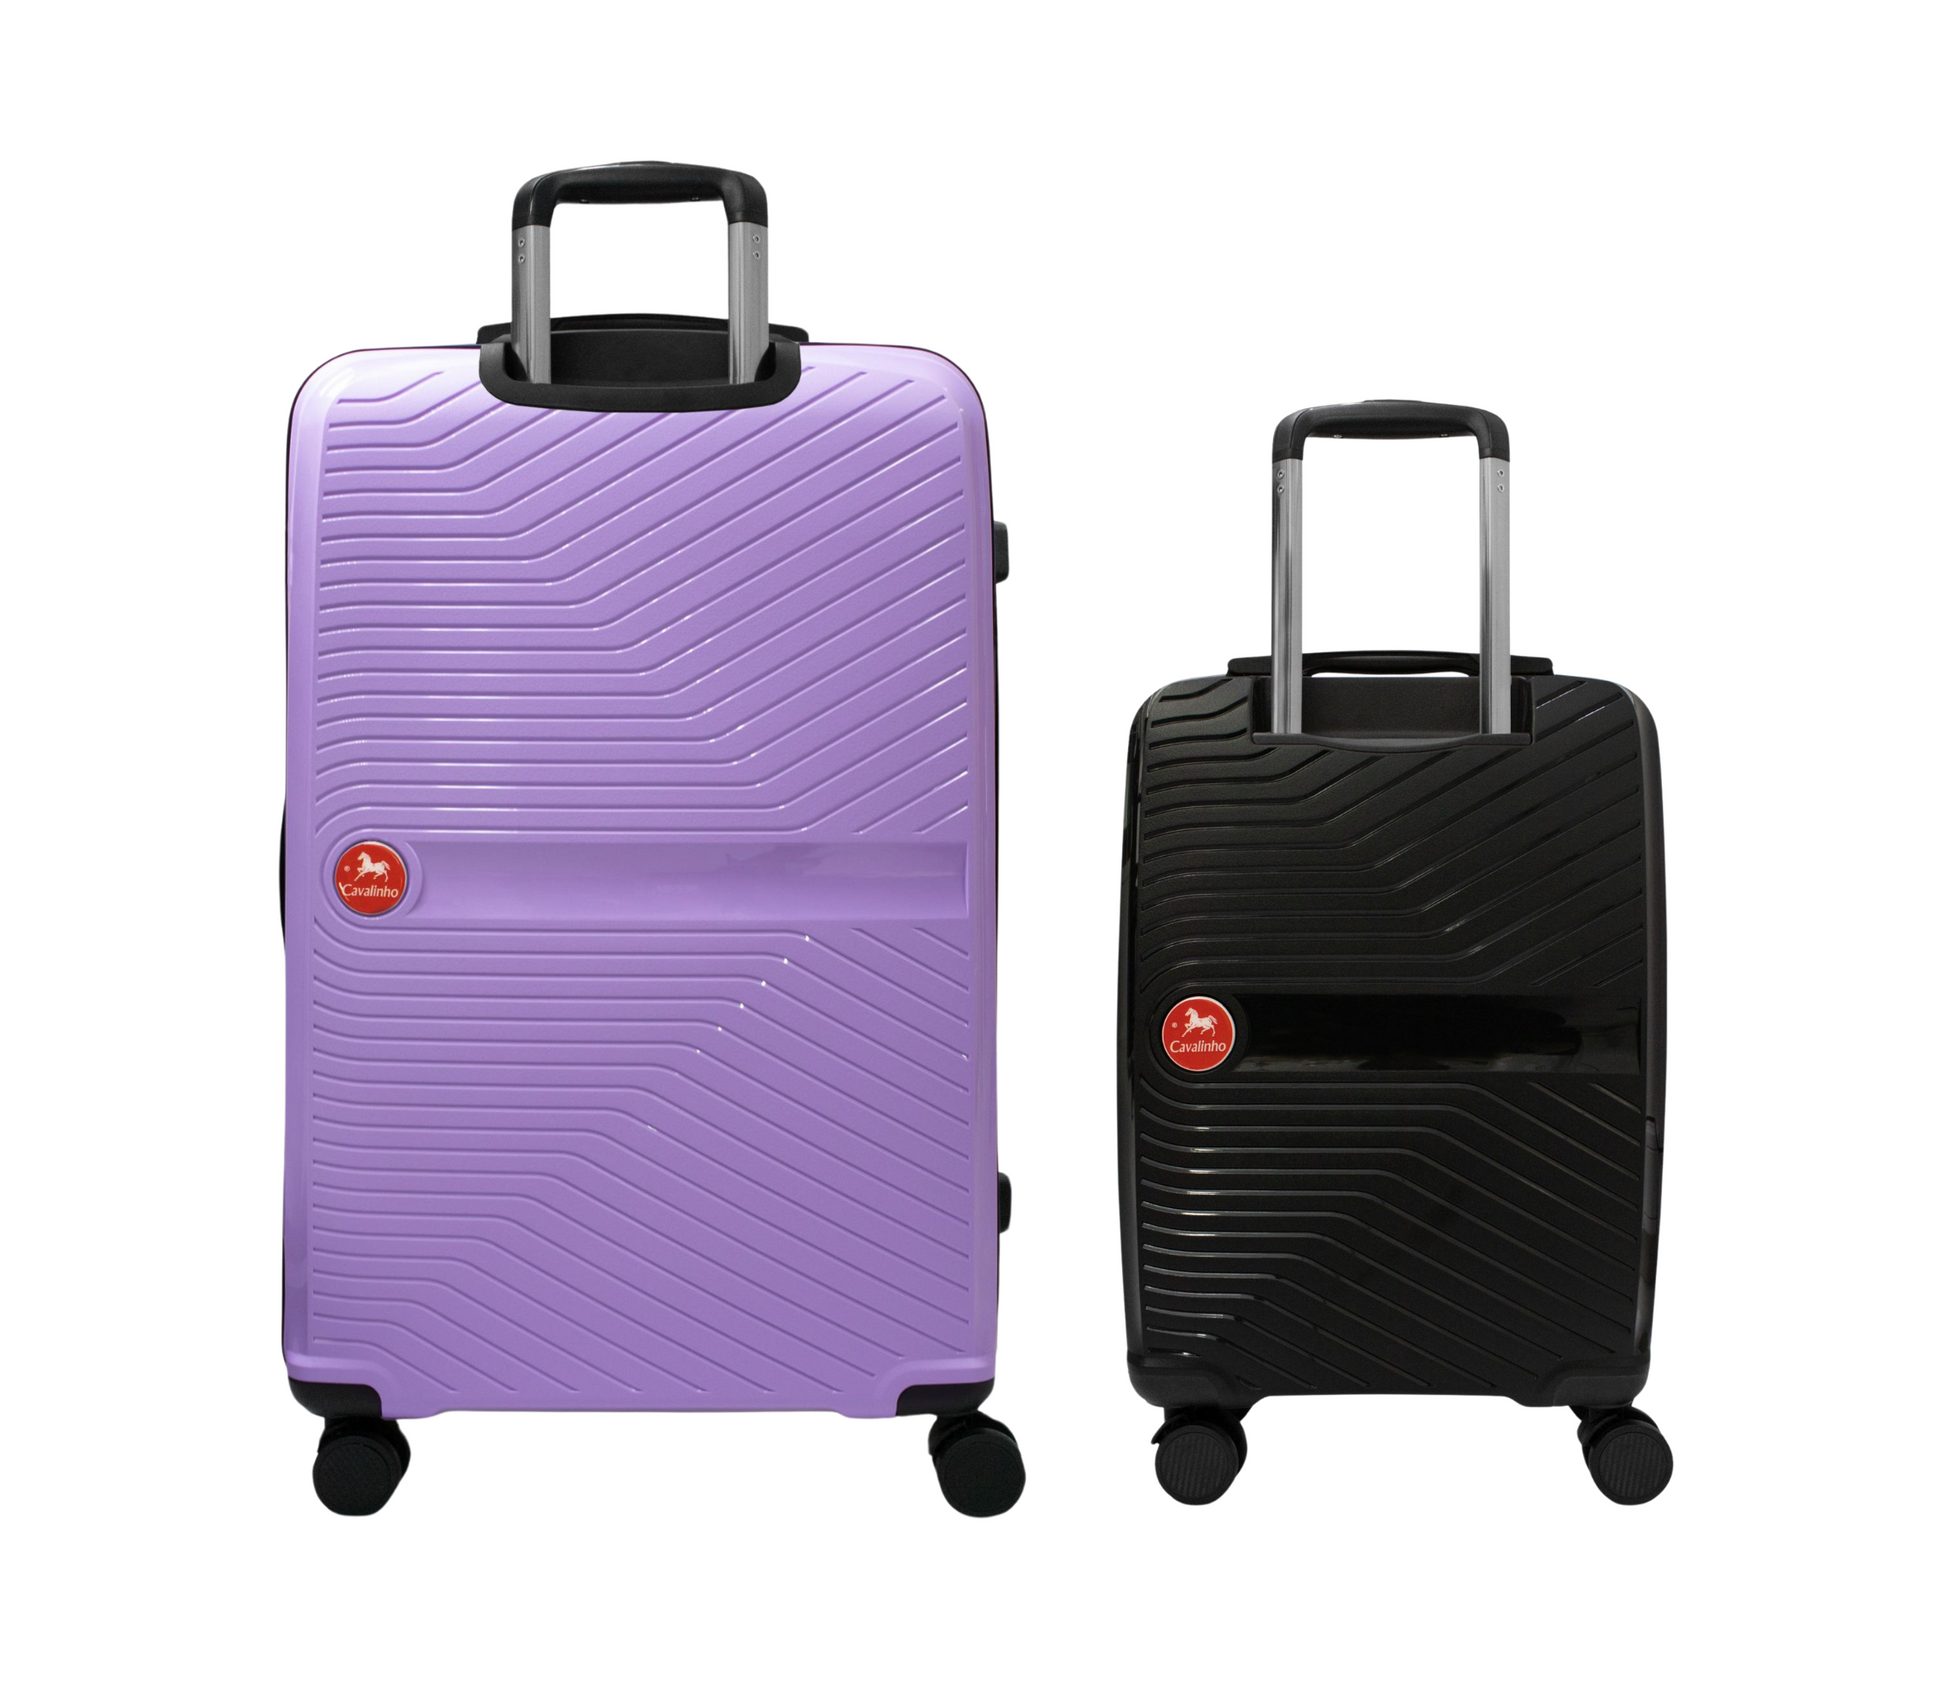 Cavalinho Colorful 2 Piece Luggage Set (19" & 28") - Black Lilac - 68020004.0139.S1928._3